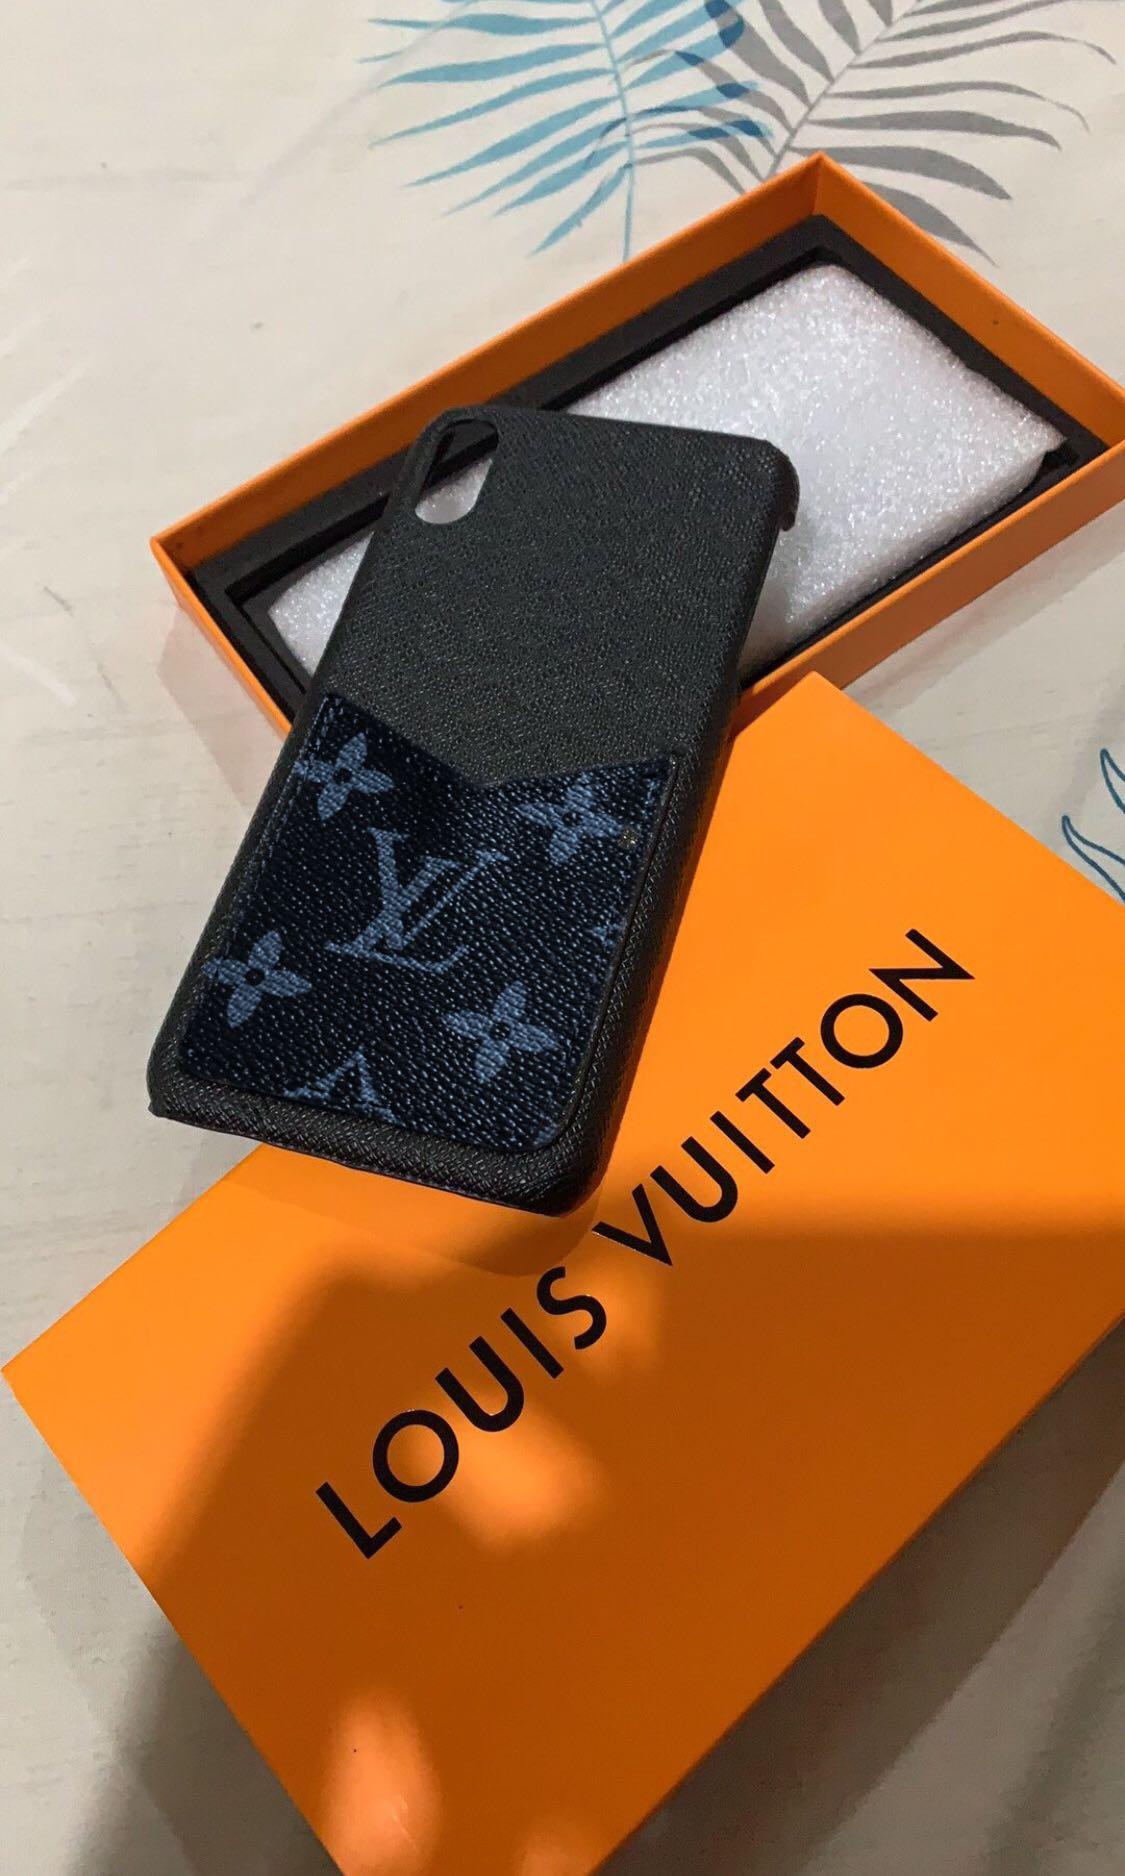 Louis Vuitton Black Leather and Monogram Canvas Bumper iPhone X/XS